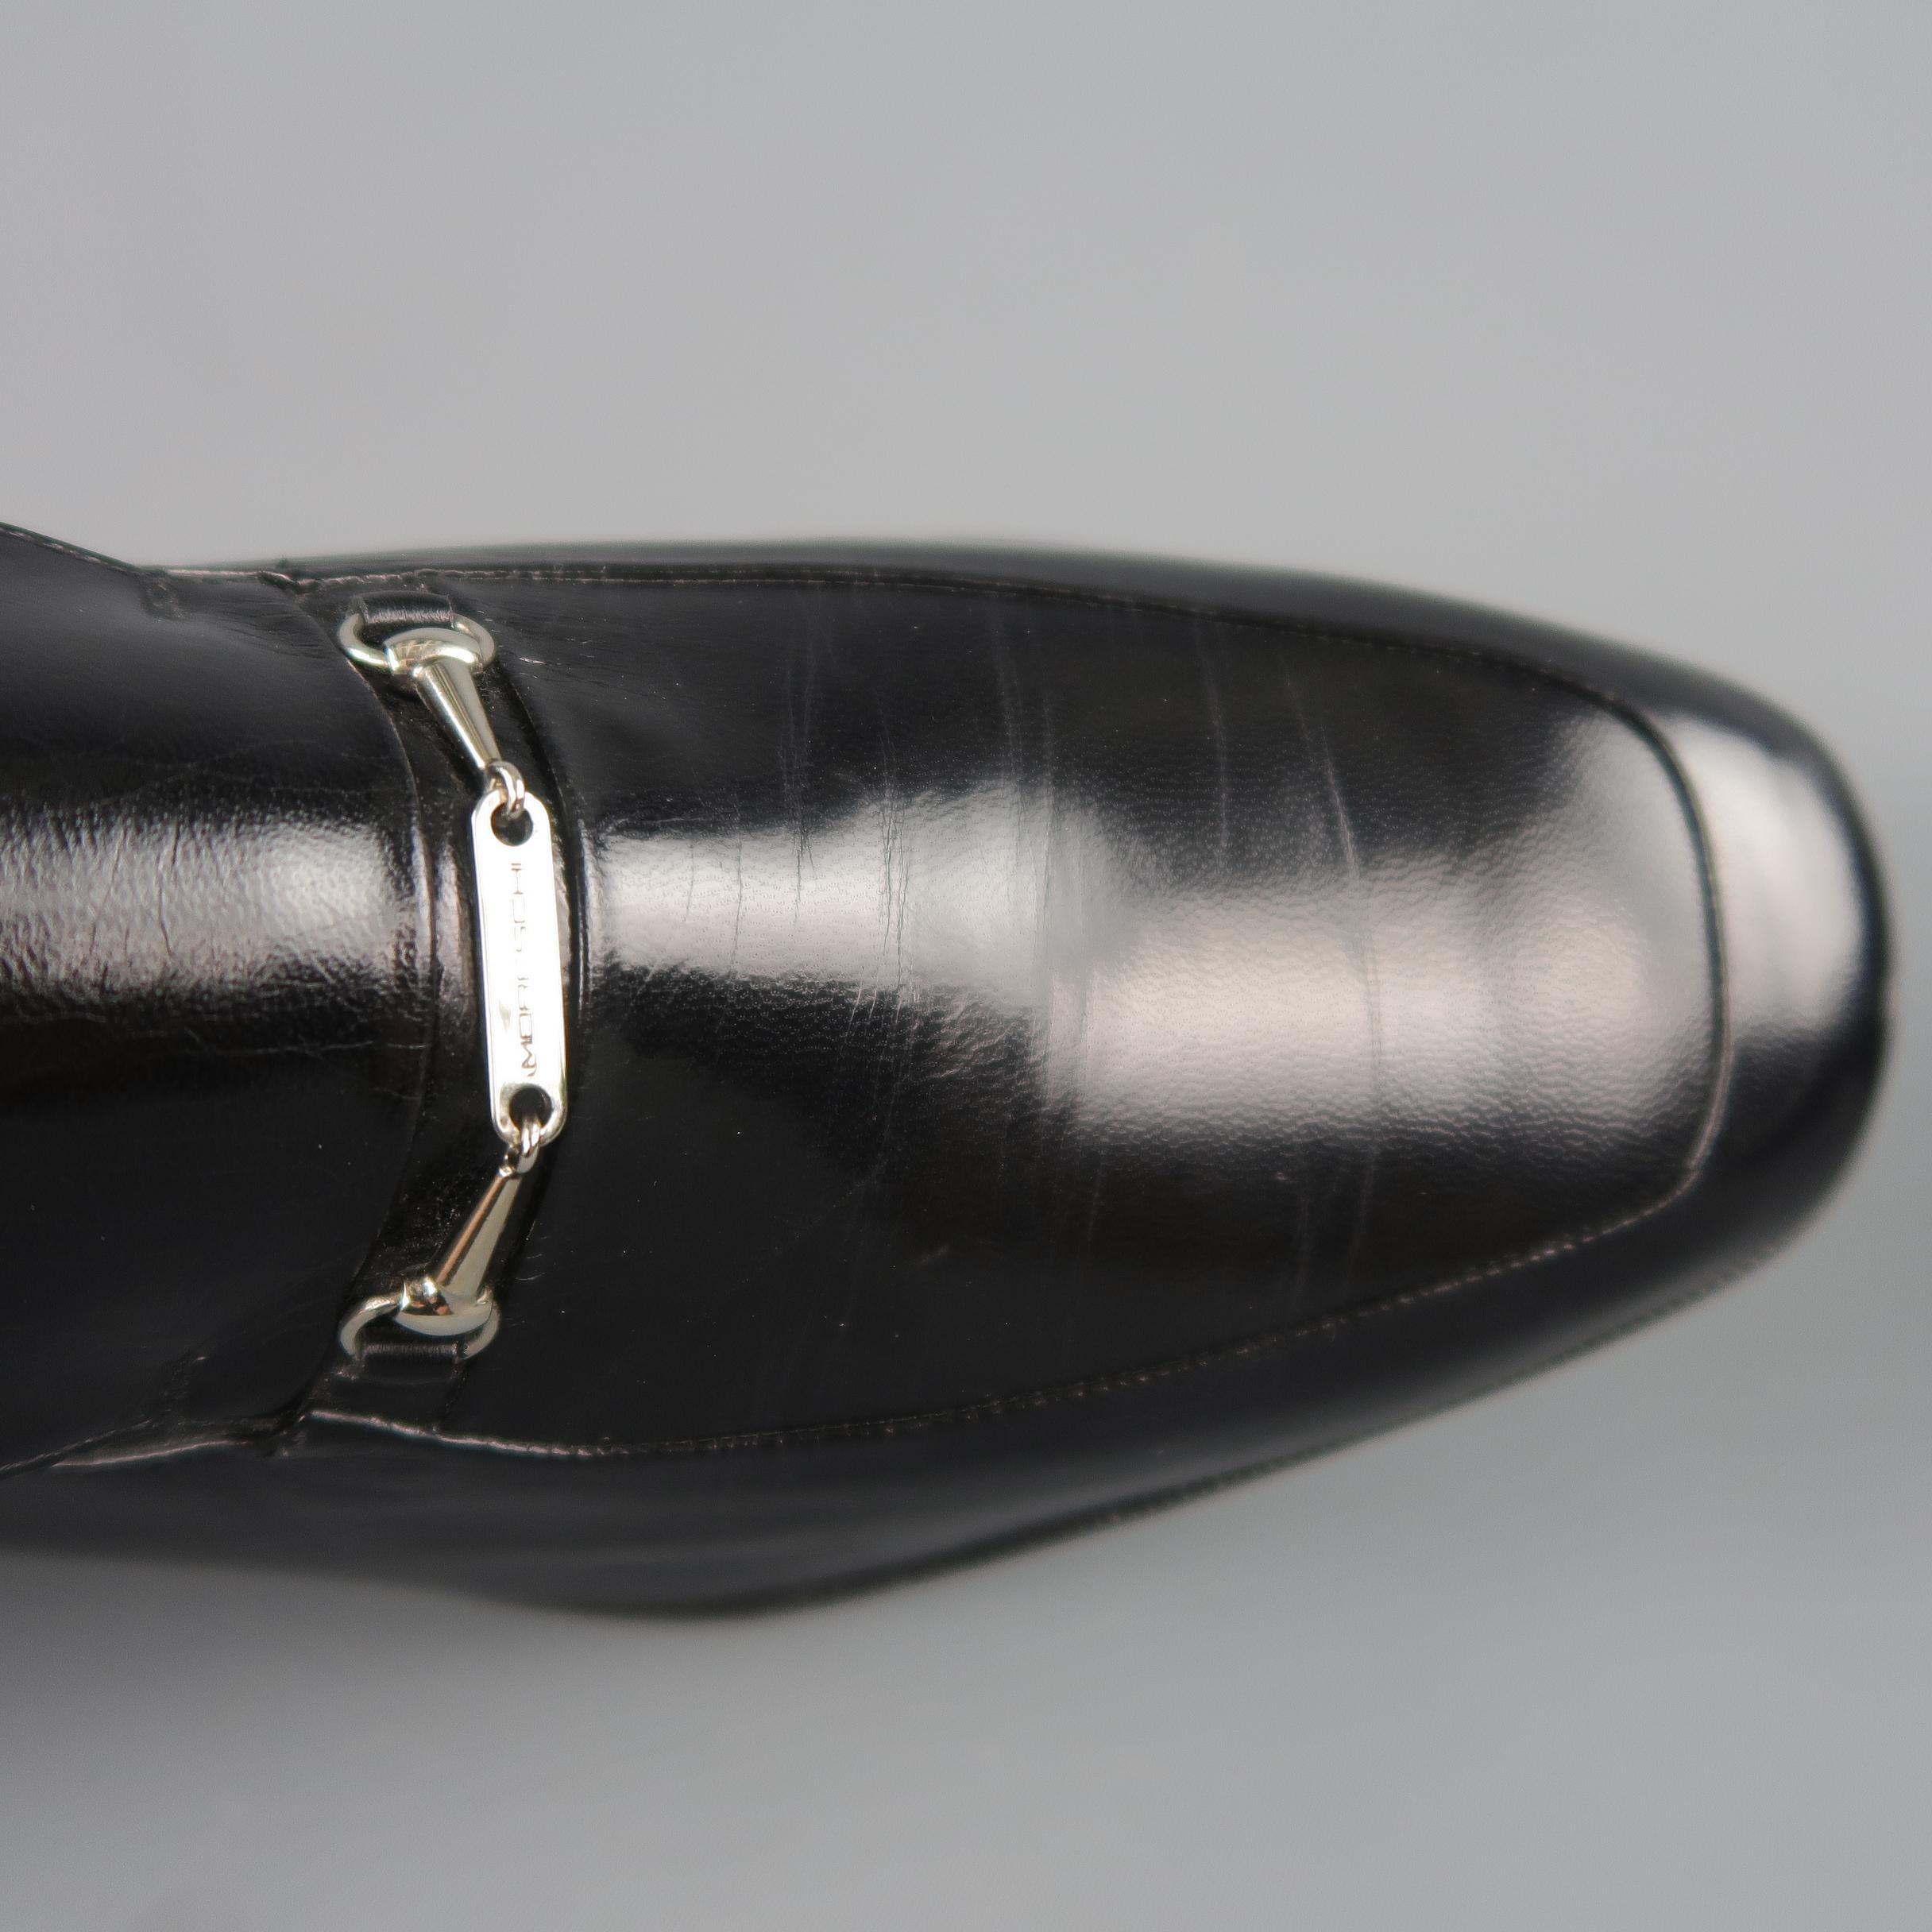 Men's Moreschi Dress shoes - Black Leather Apron Toe Silver Hardware Loafers